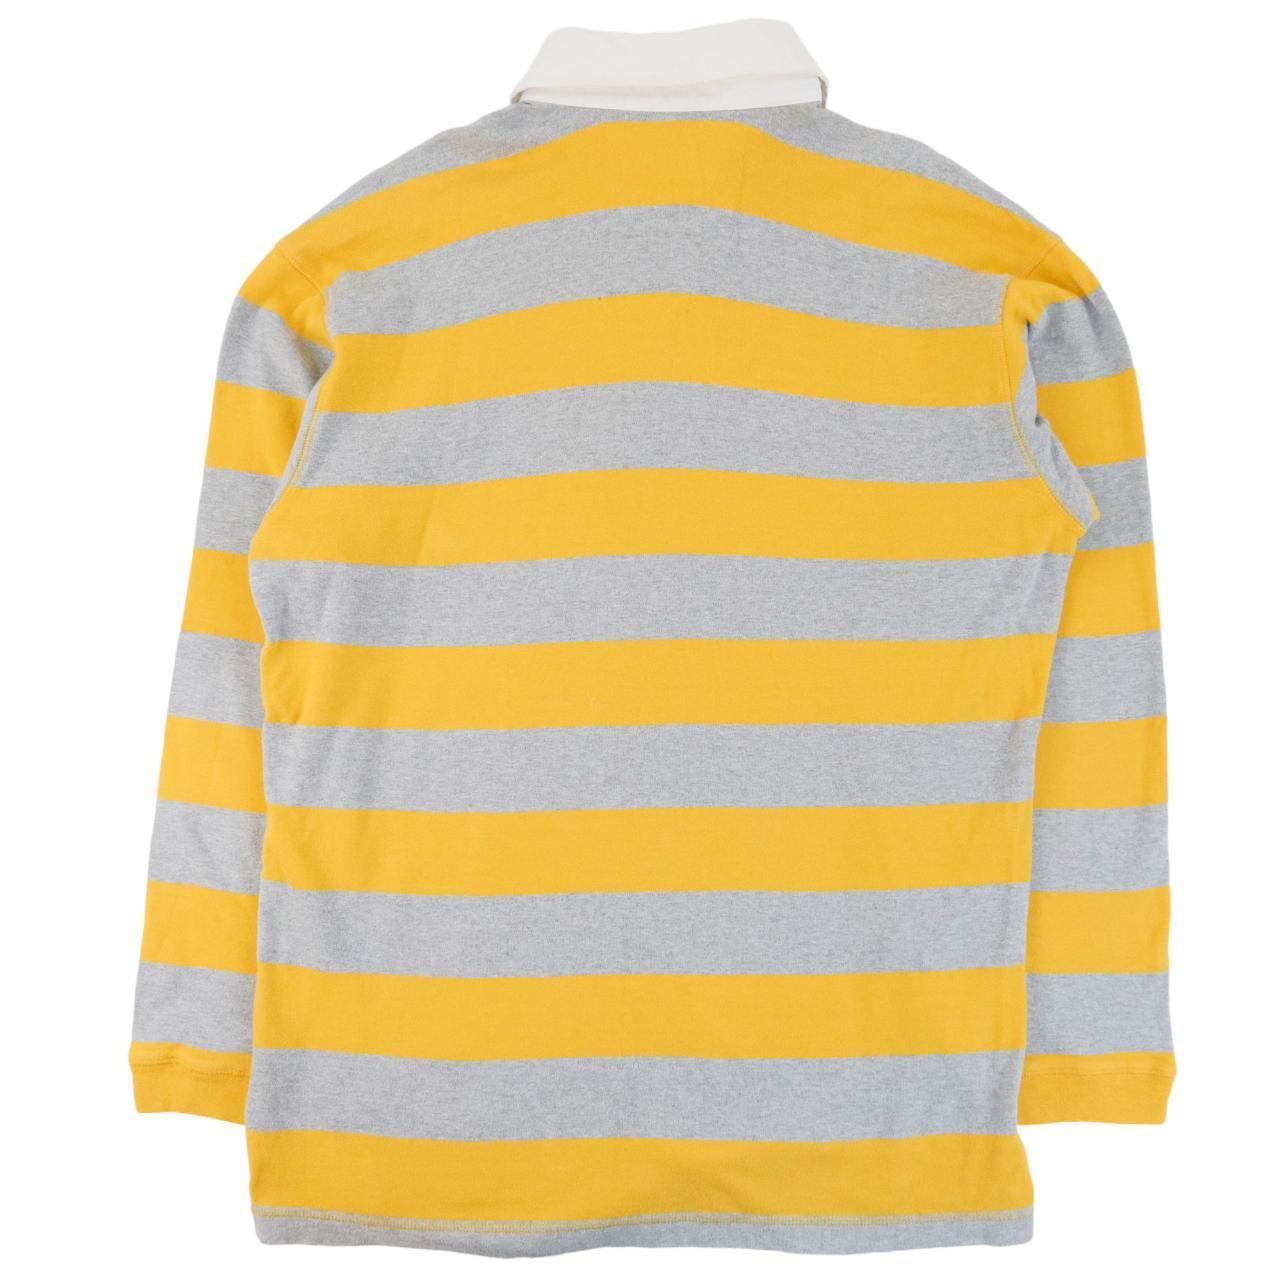 Vintage YSL Yves Saint Laurent Striped Polo Shirt Size M - Known Source